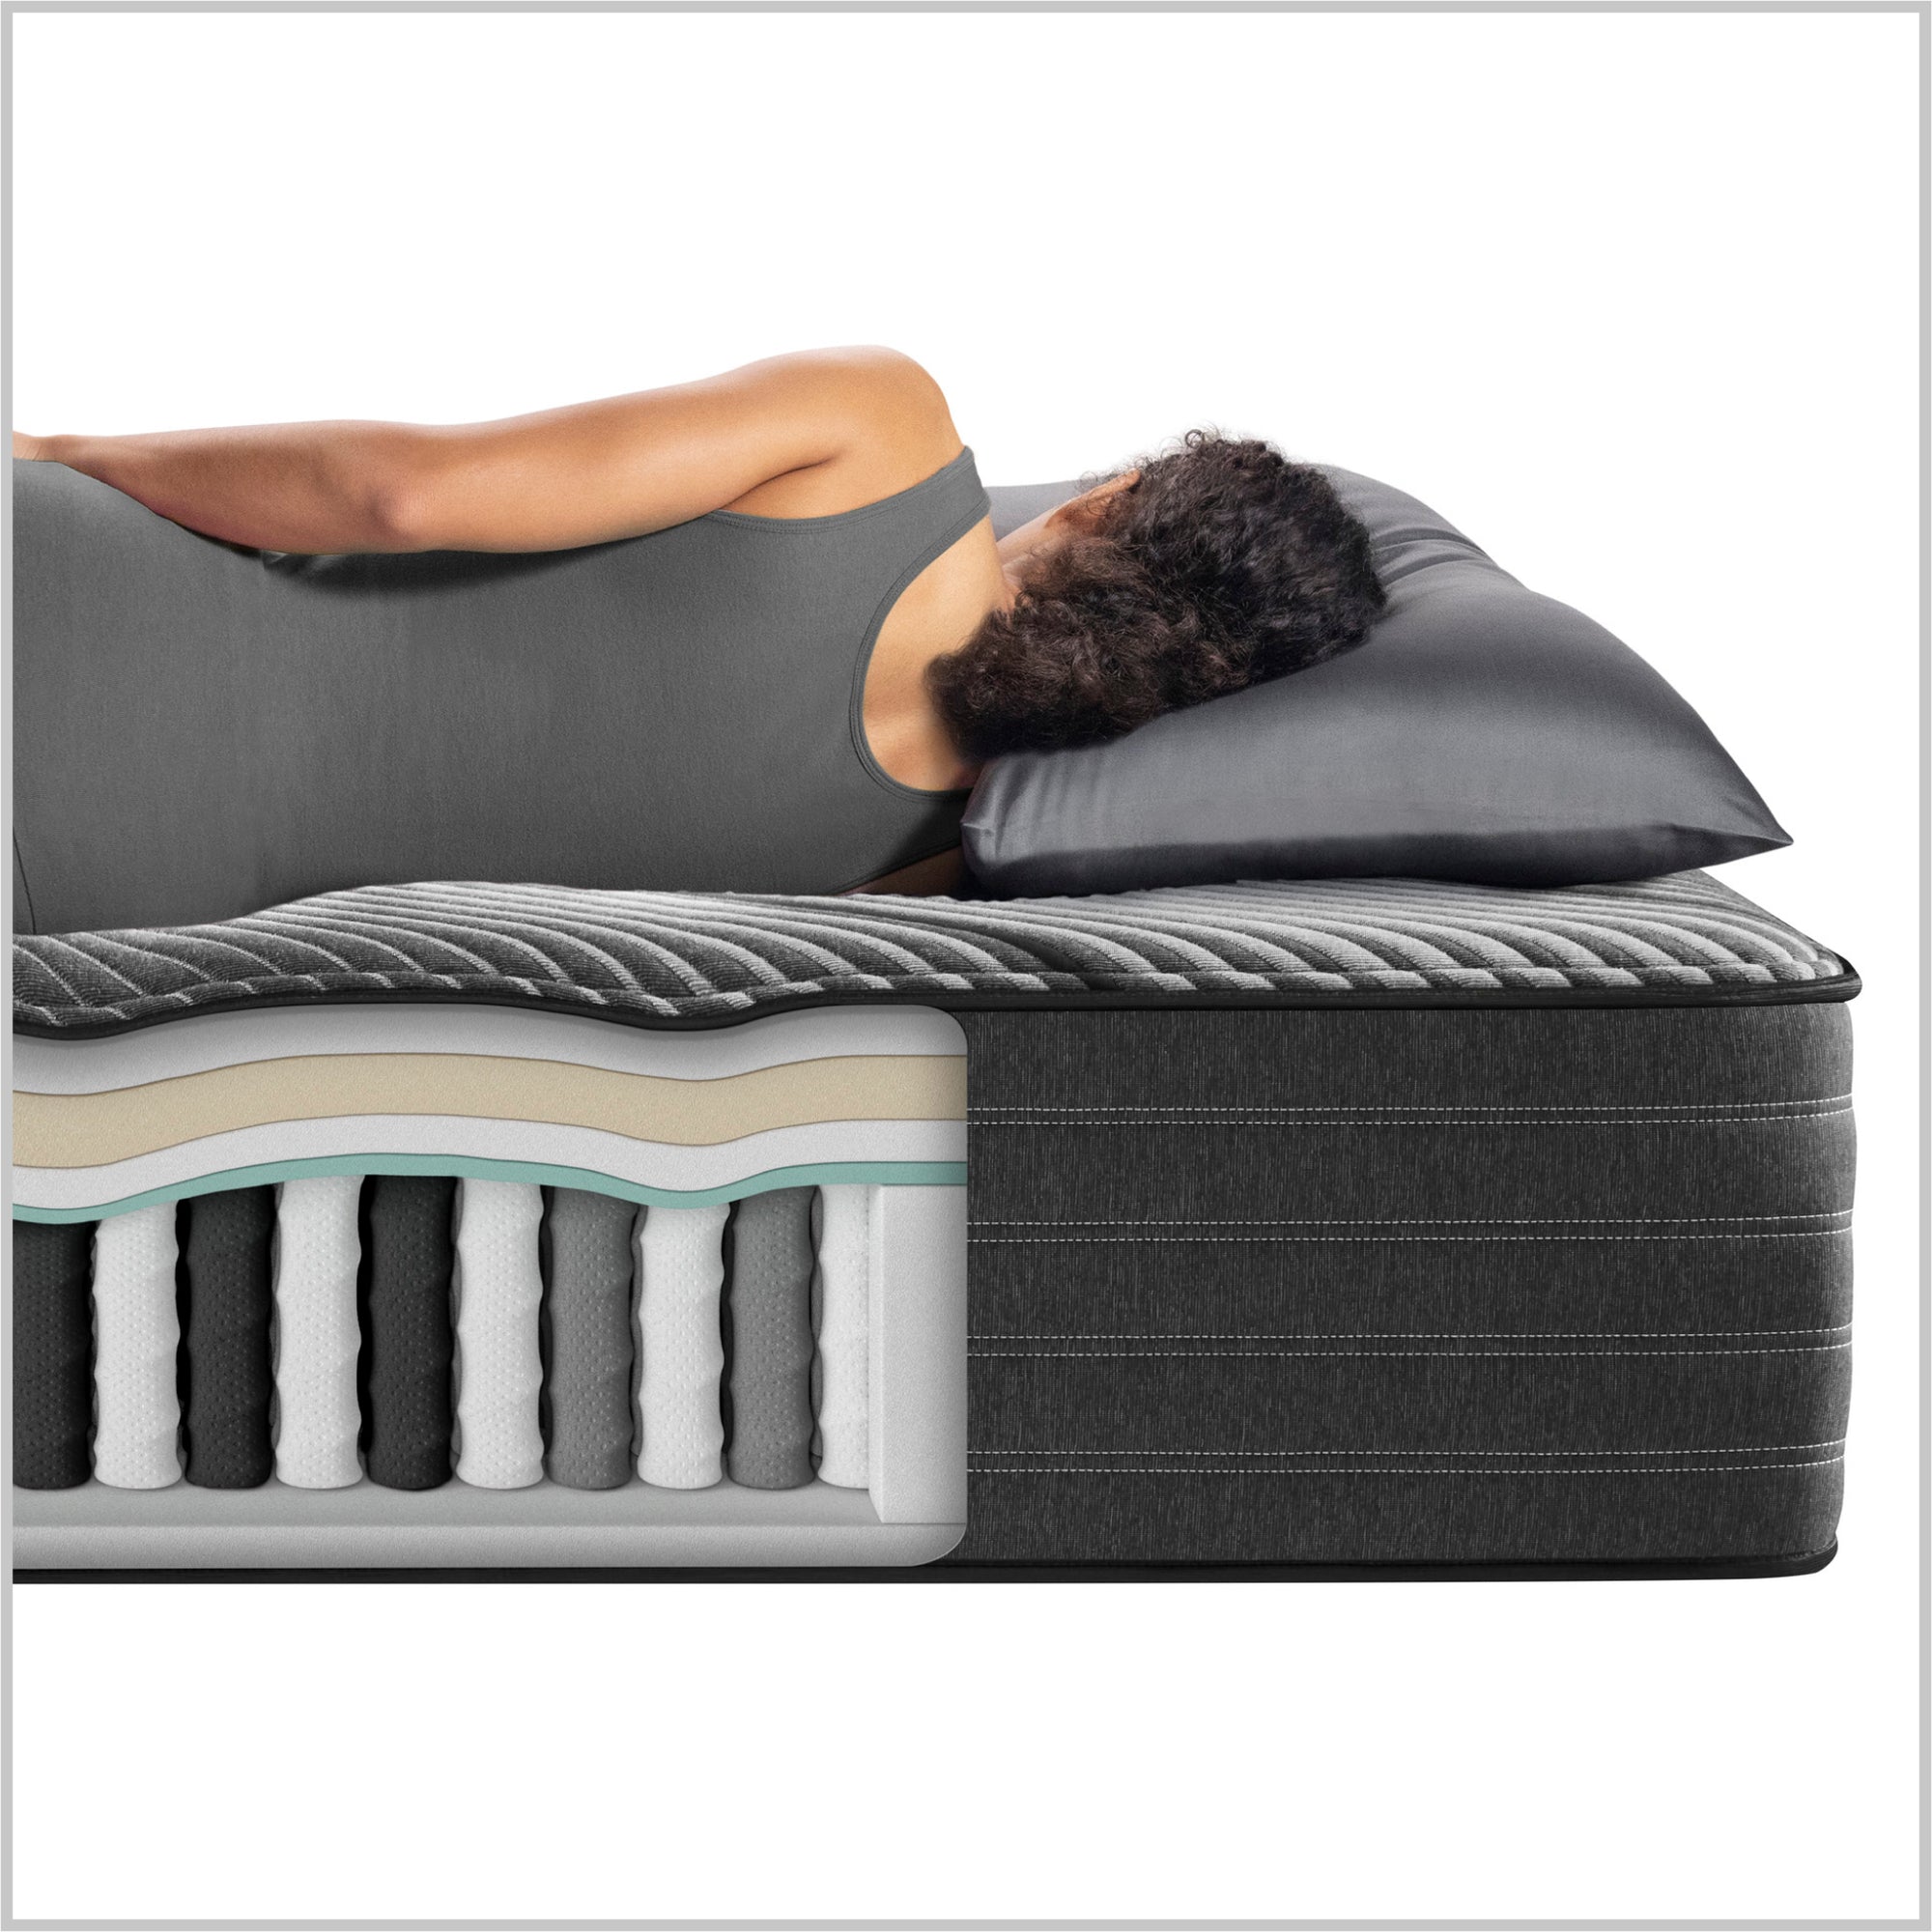 Diagram showing the material inside the Beautyrest Black hybrid mattress||series: enhanced lx-class||feel: firm